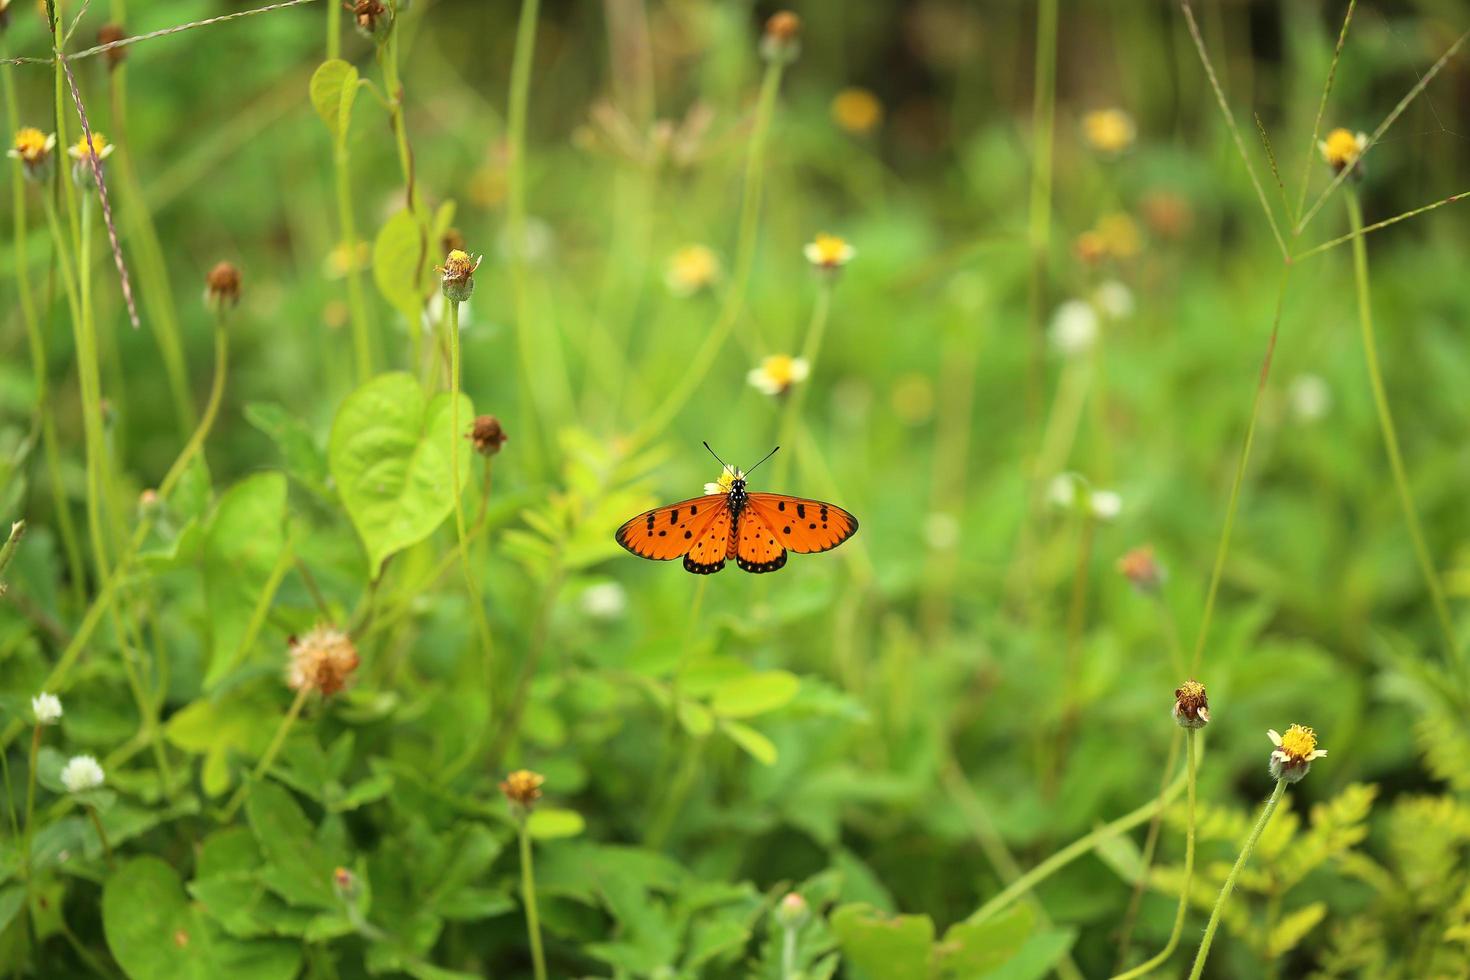 Monarch butterfly on flower in the garden. photo